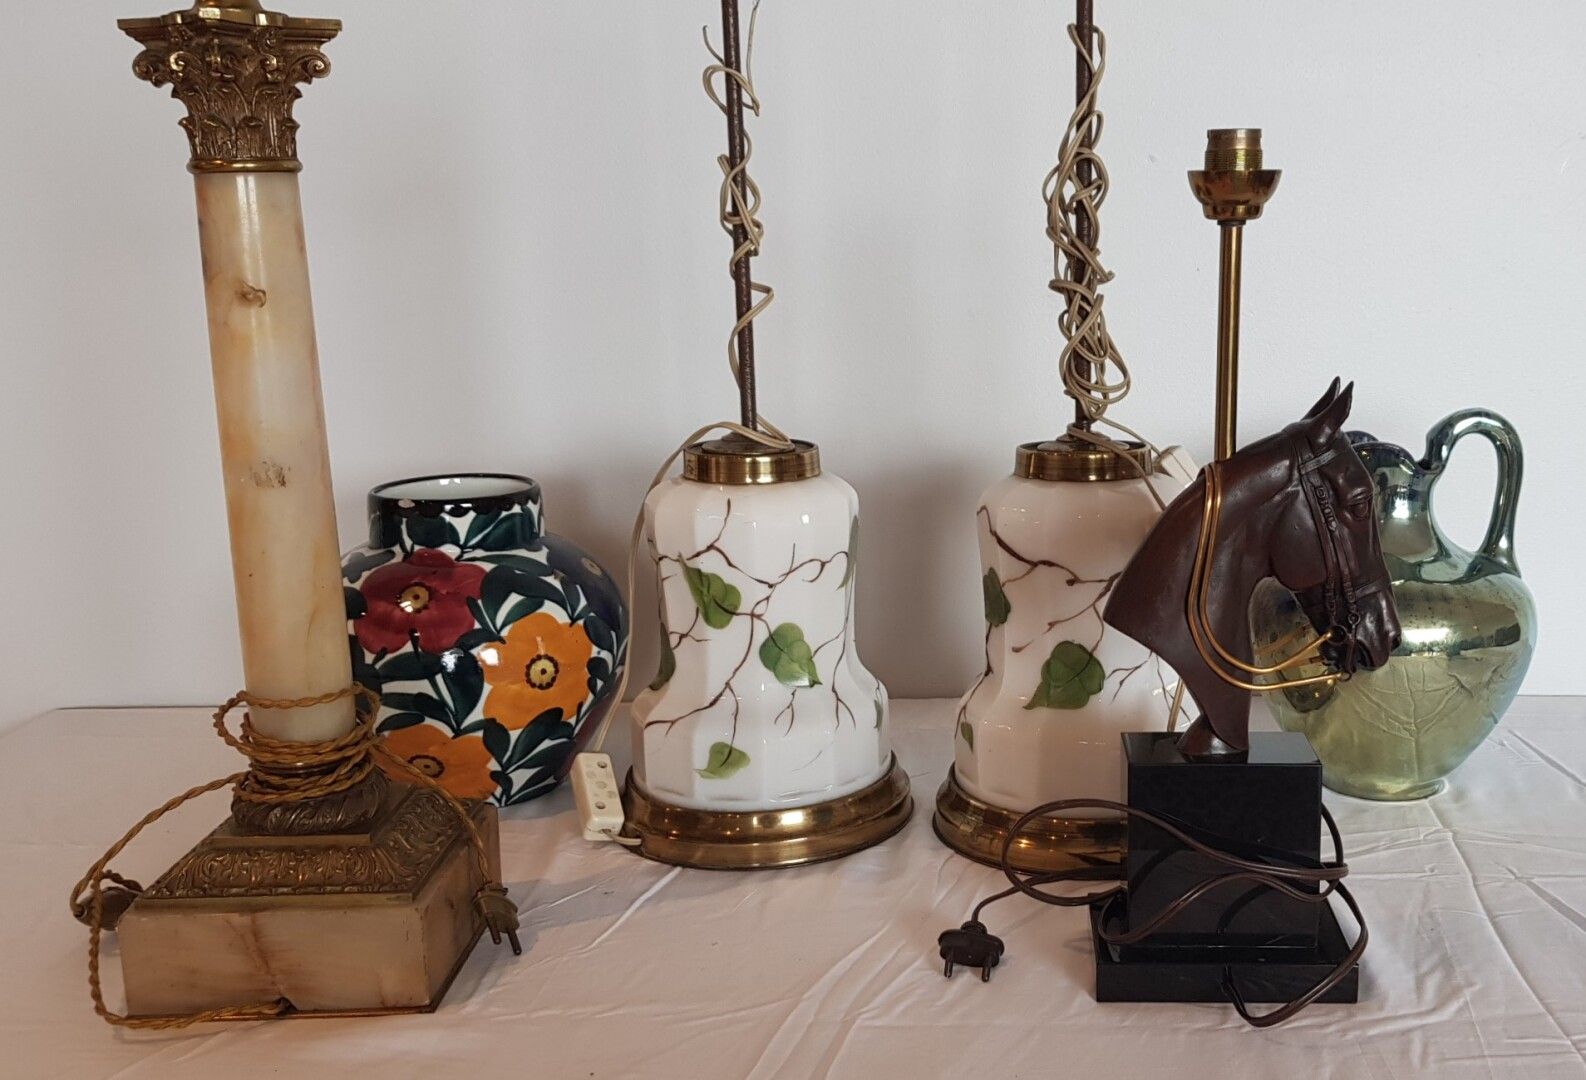 Null 地段包括 :

四个不同的灯座

釉面陶器壶

珐琅彩花瓶